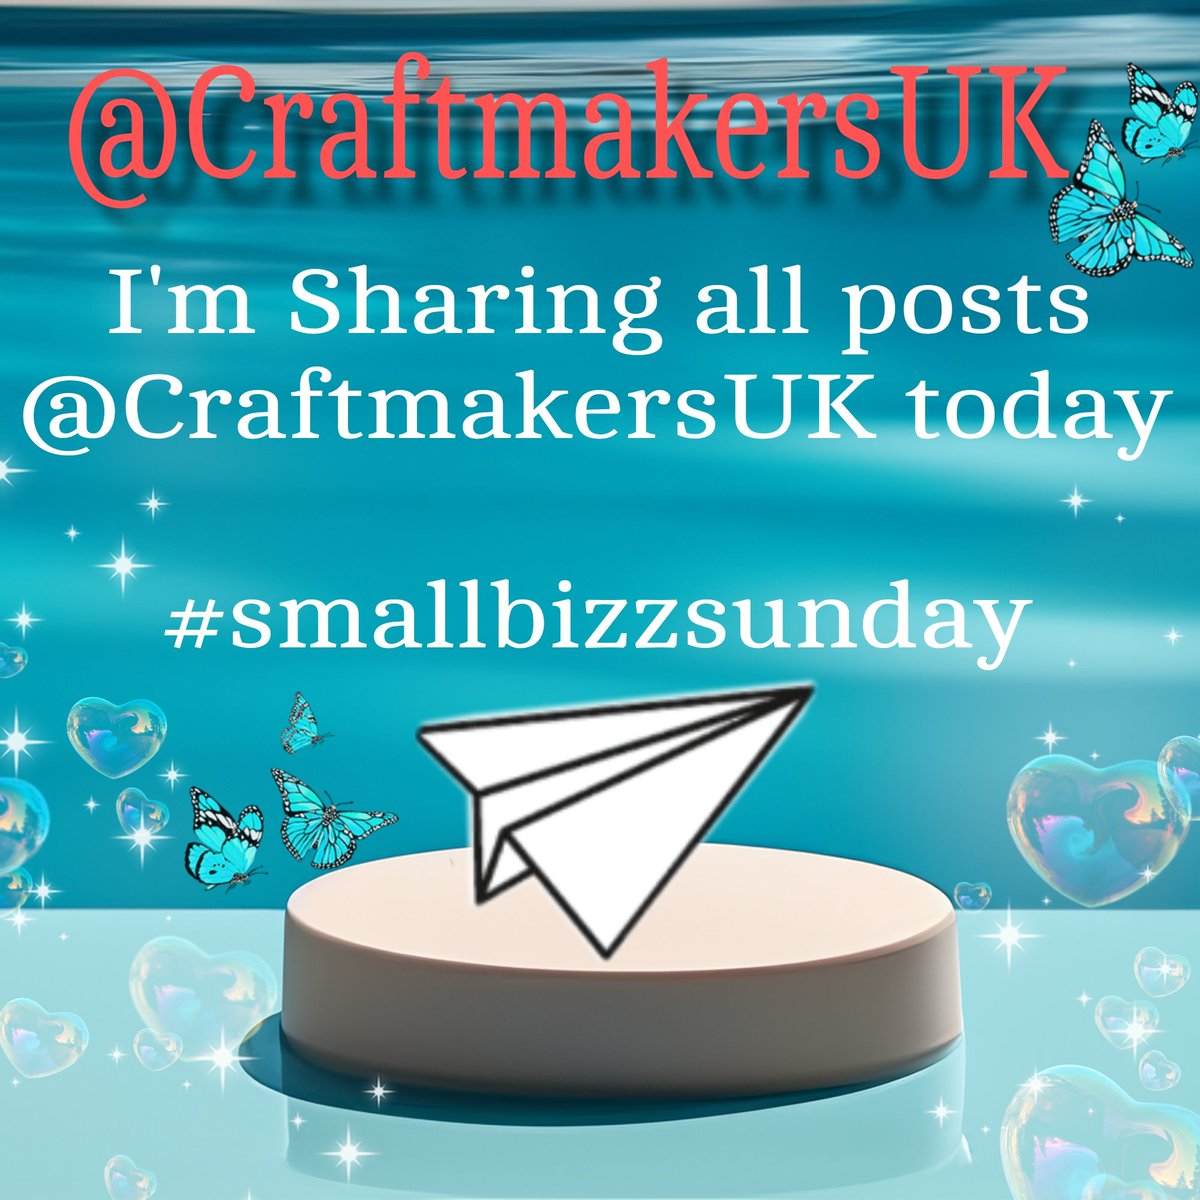 👍👍SHARING POSTS👍👍👇👇👇 💙@CraftmakersUK 💙
#smallbizzsunday #crafters #art #gifts #smallbusiness #smallshops #etsyshops #sharing